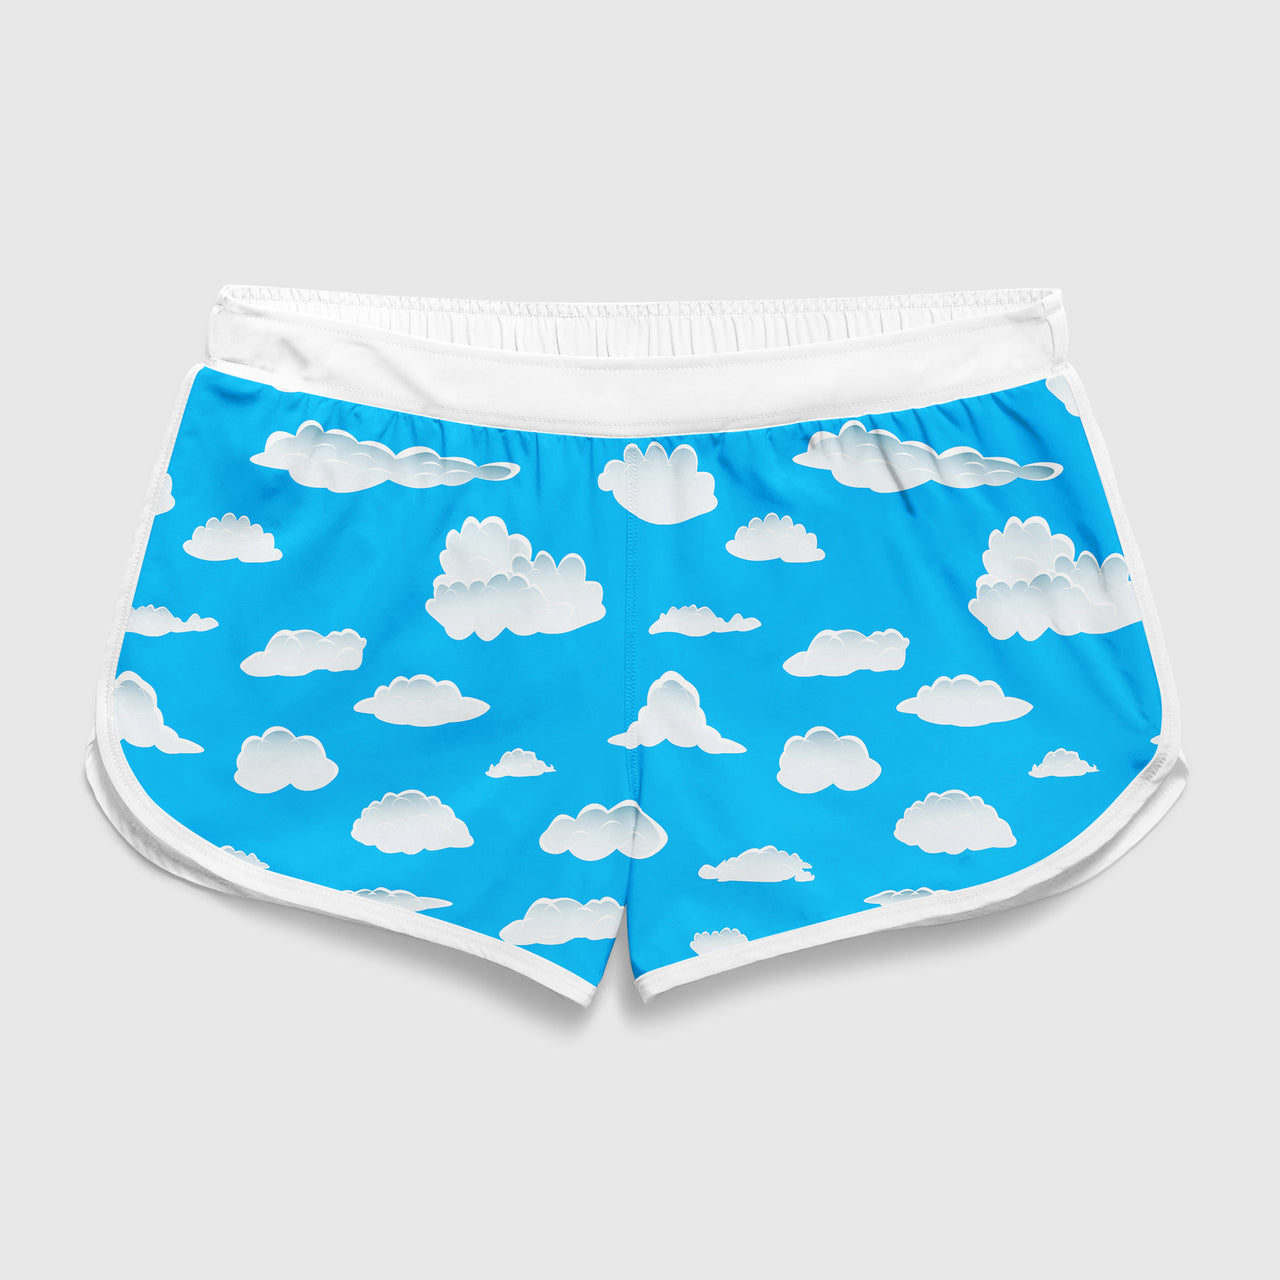 Amazing Clouds Designed Women Beach Style Shorts